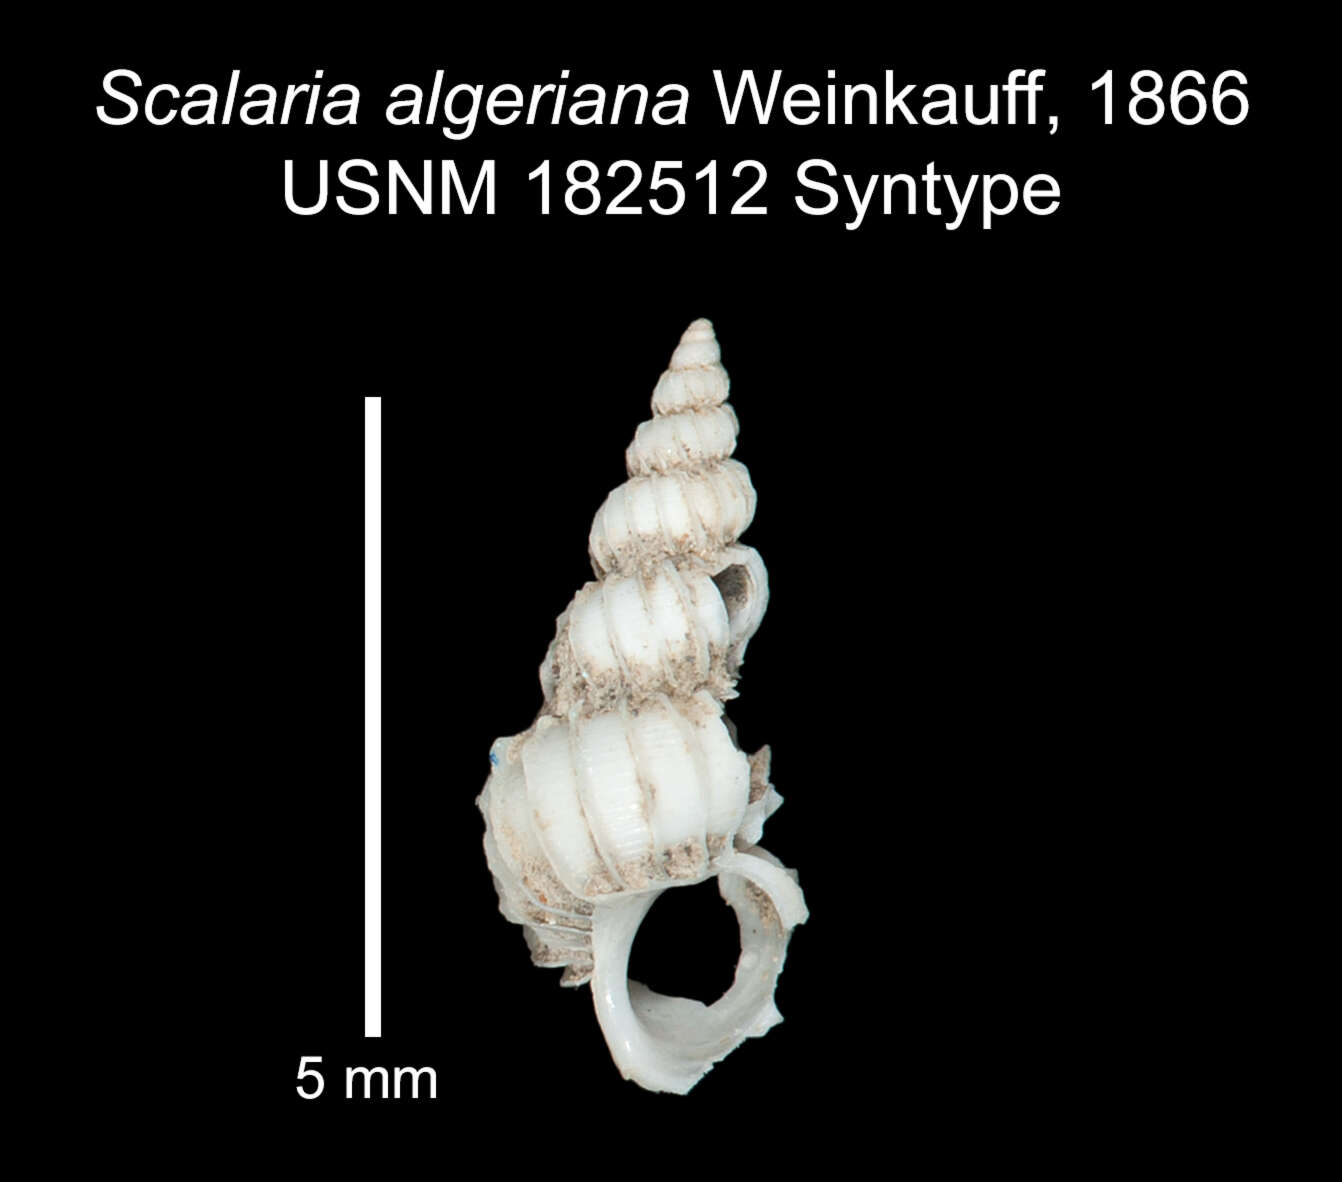 Image of Scalaria algeriana Weinkauff 1866